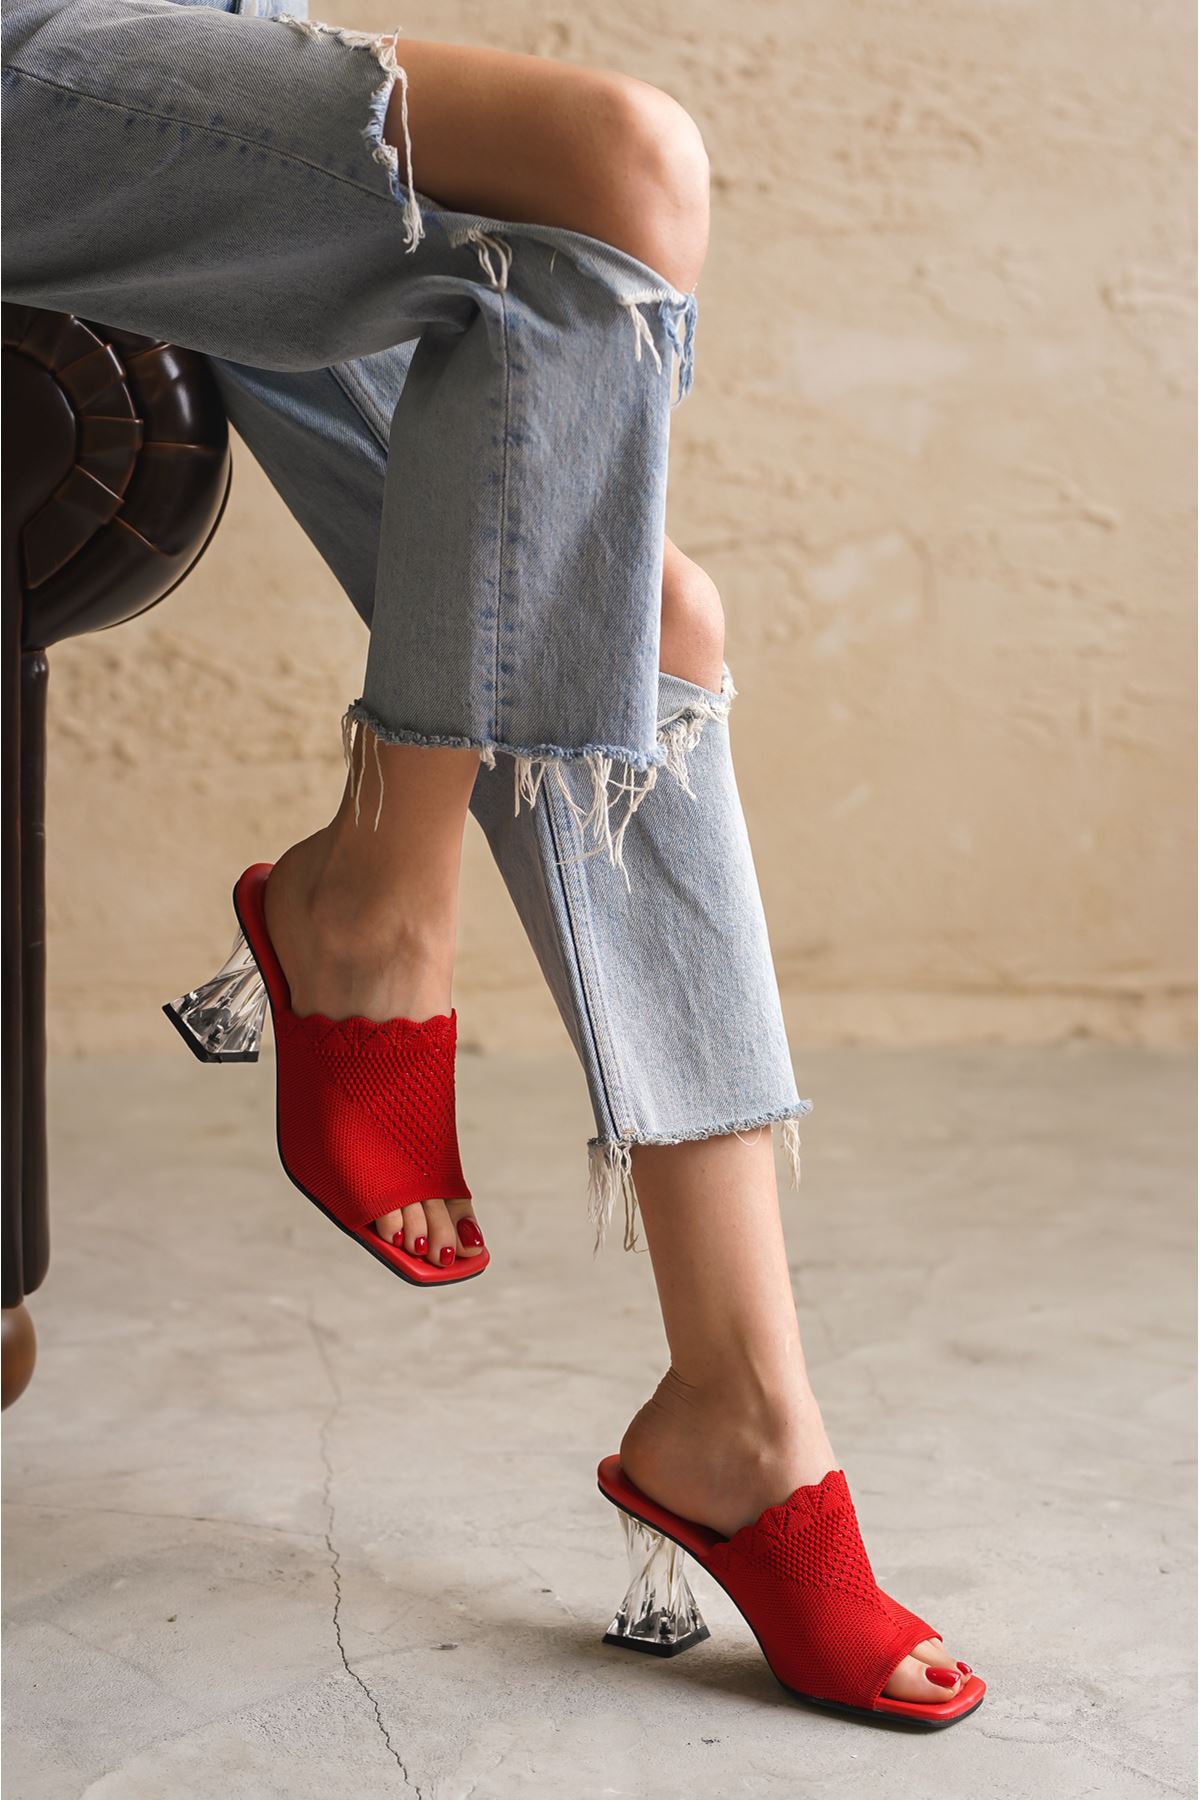 Kadın Morget Şeffaf Topuklu Triko Terlik - Kırmızı